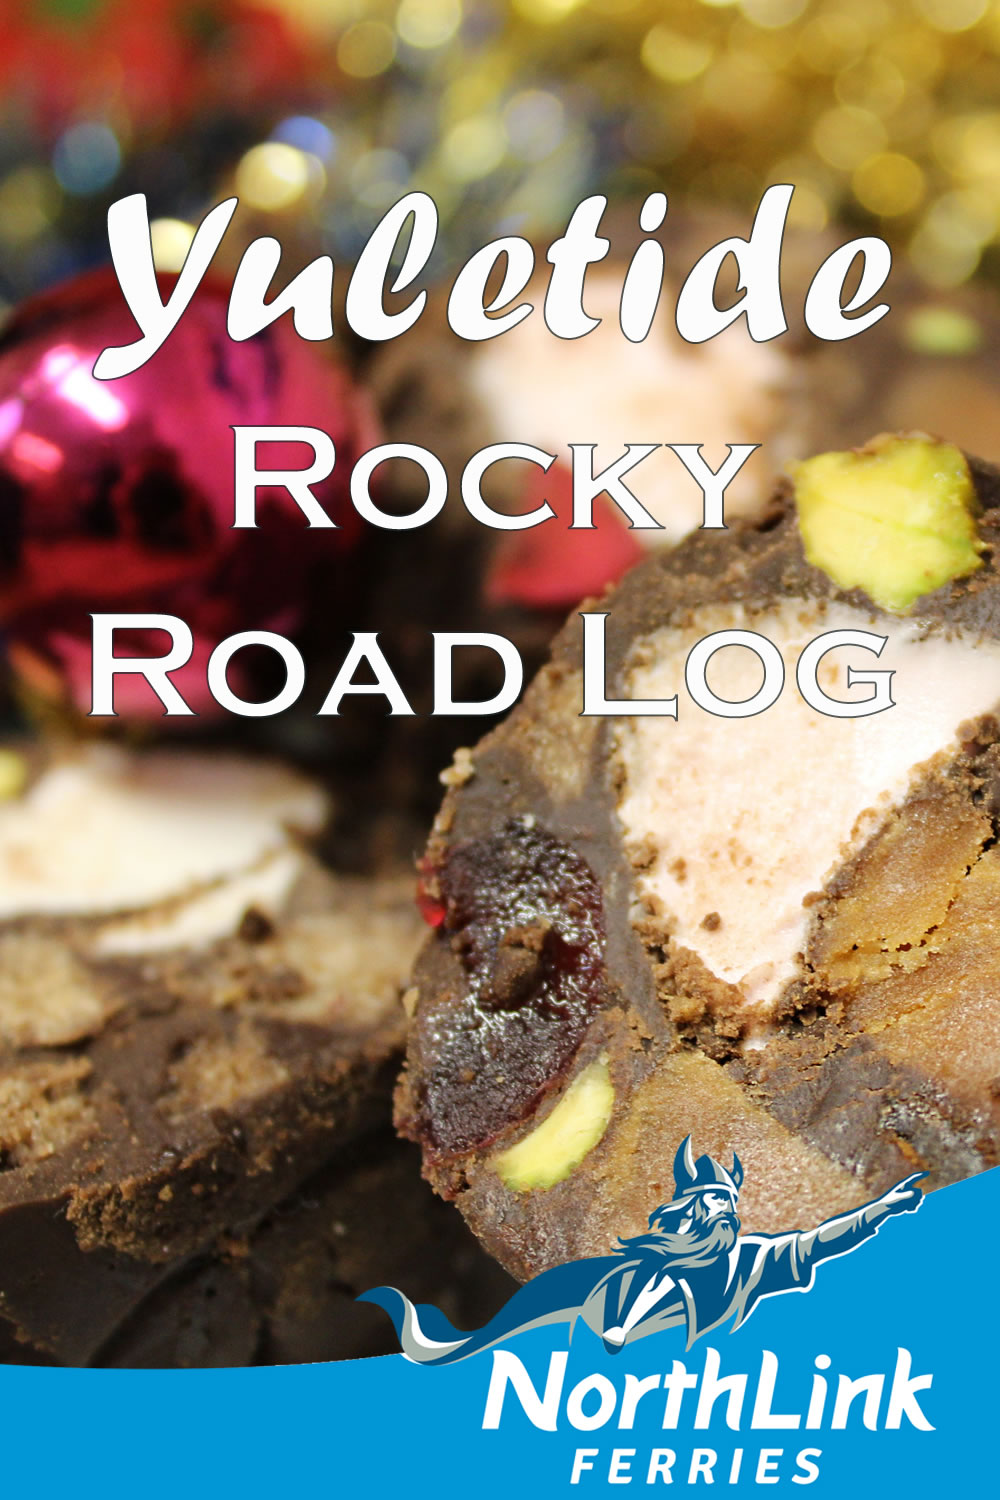 Yuletide Rocky Road Log recipe